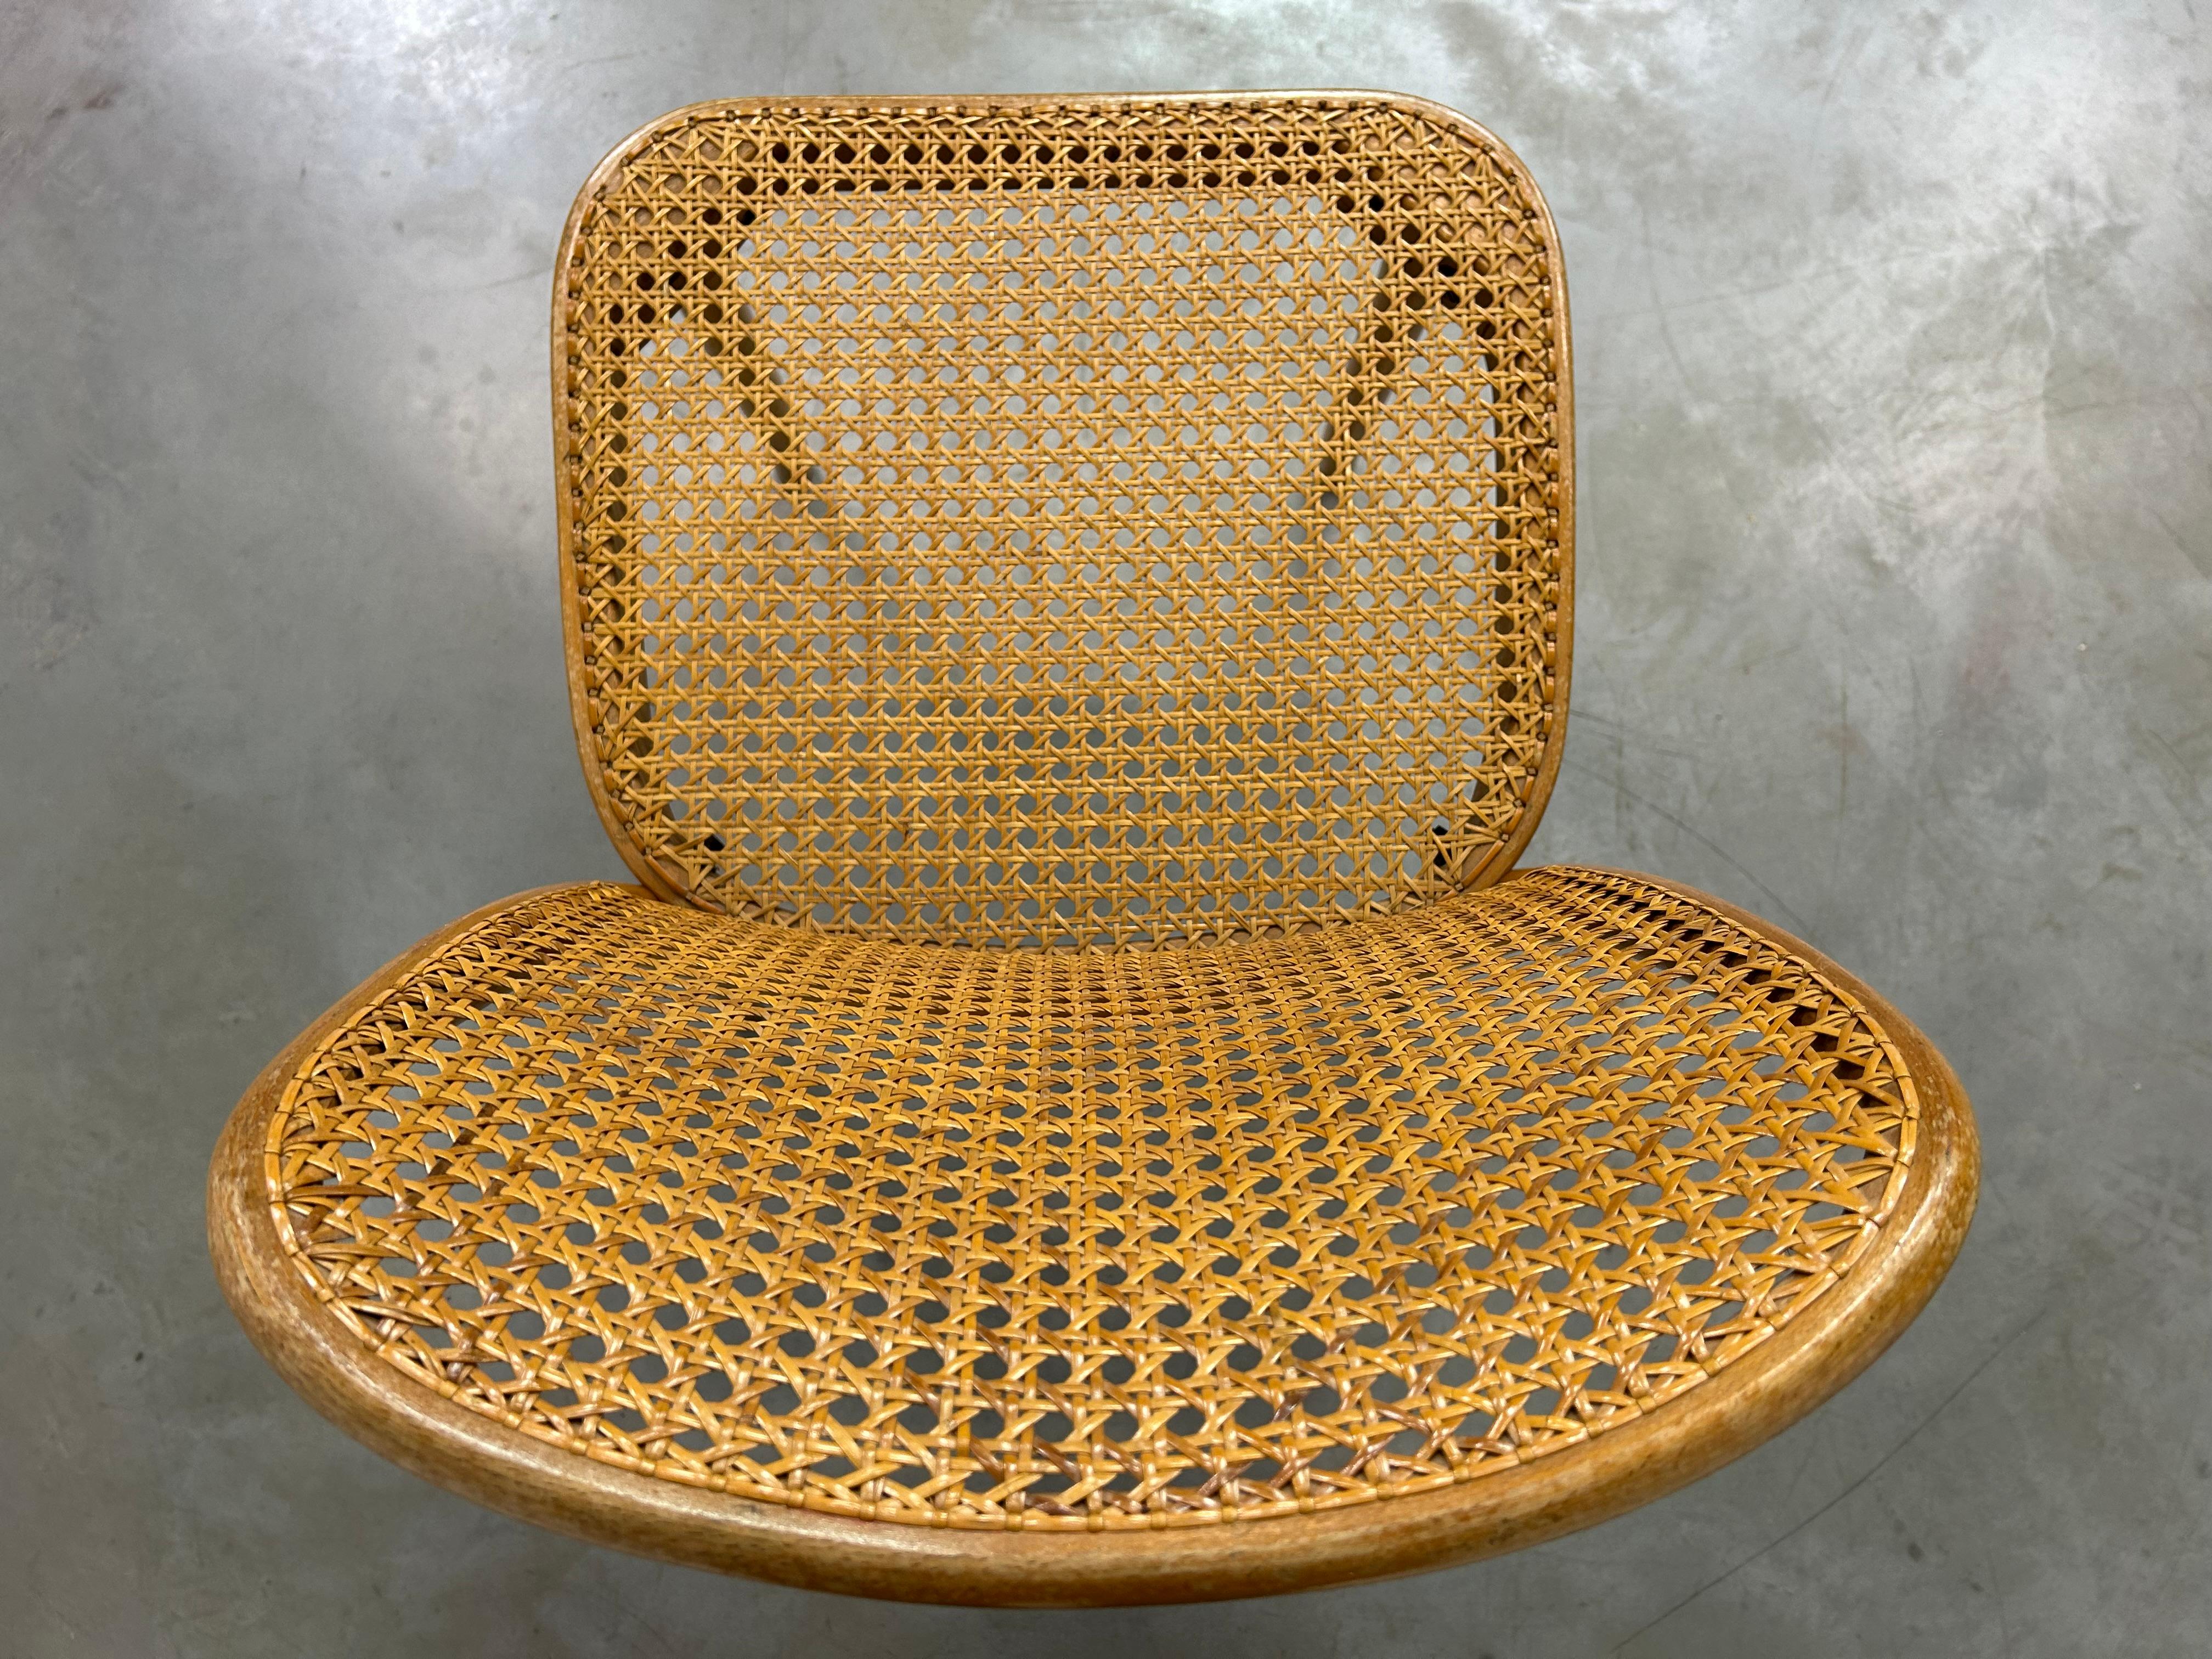 Bauhaus chair no.811 by Josef Hoffmann For Sale 1